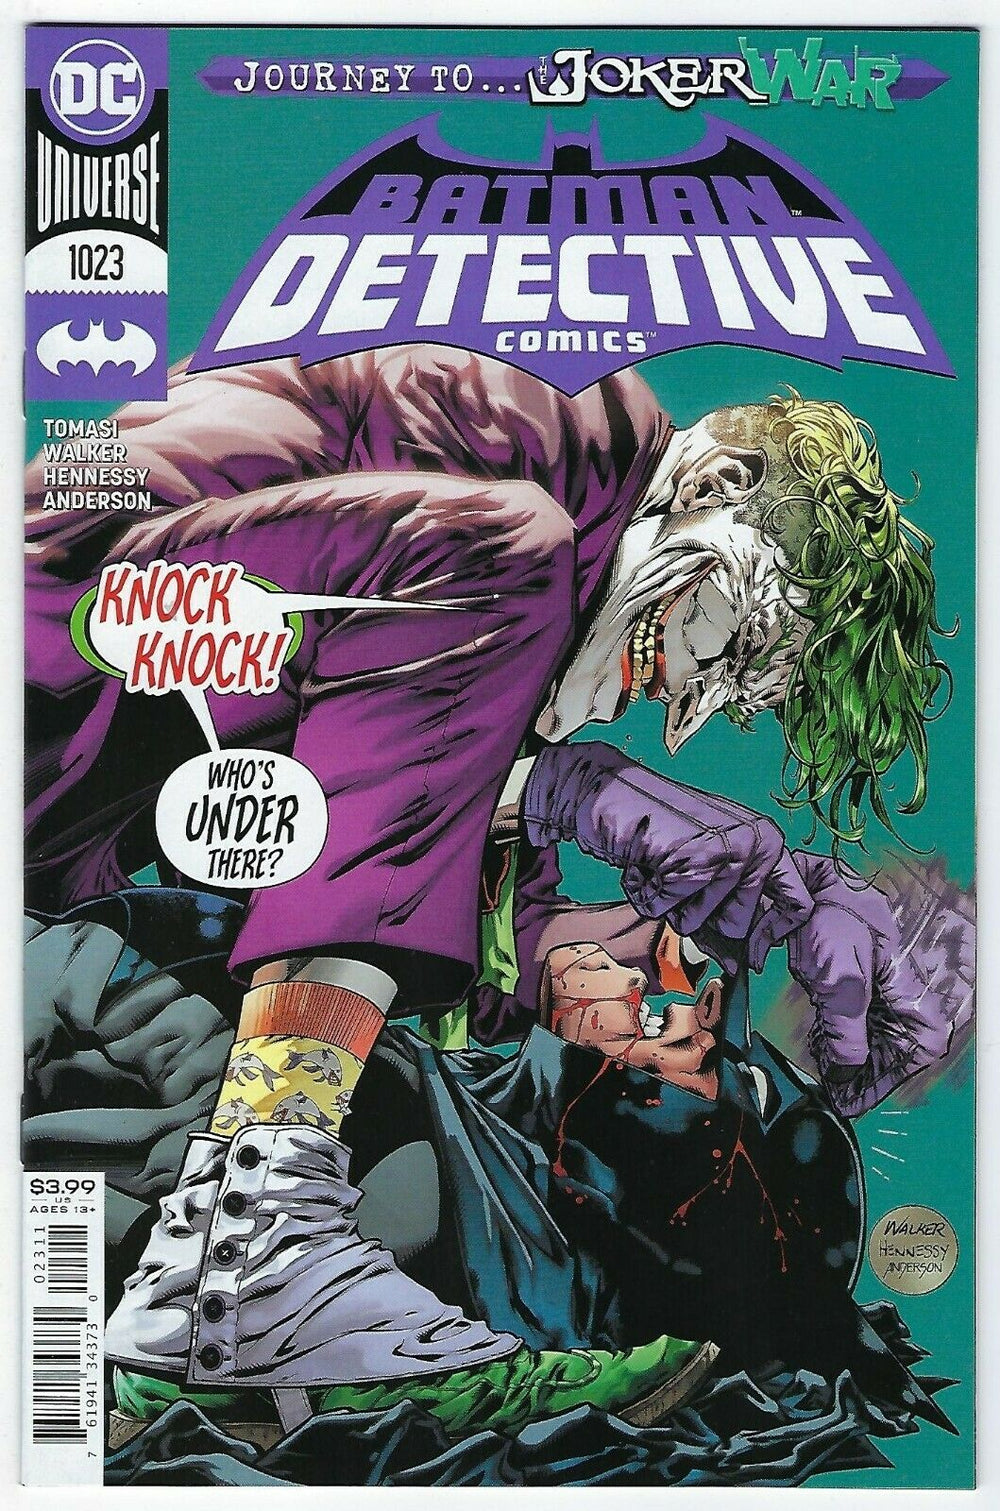 DETECTIVE COMICS #1023 (1st Print) Cover A - JOKER WAR Tie In! - Mutant Beaver Comics